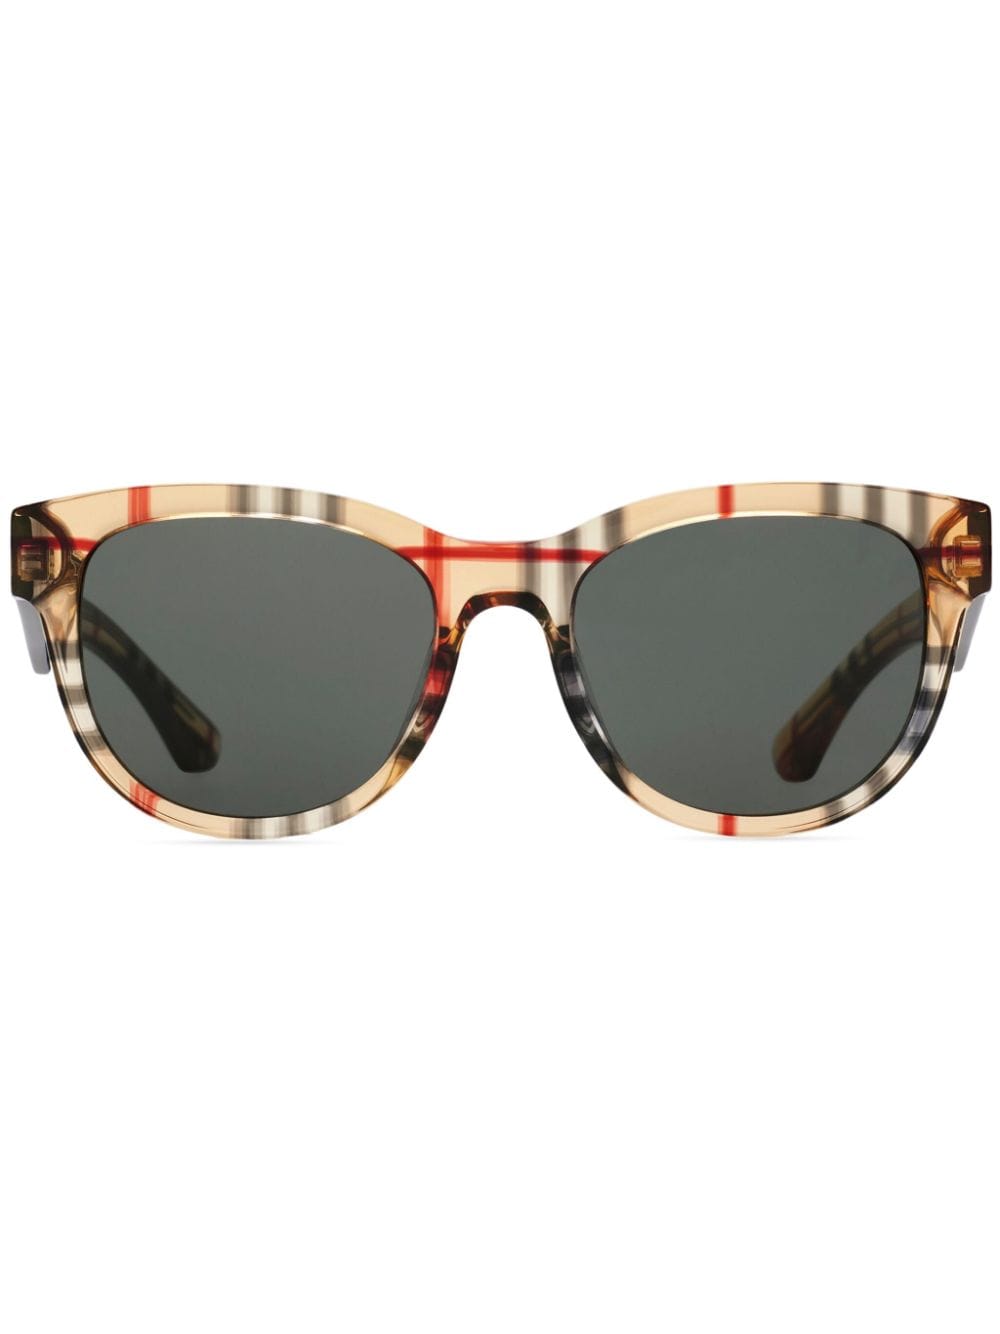 Burberry Vintage Check round-frame sunglasses Beige